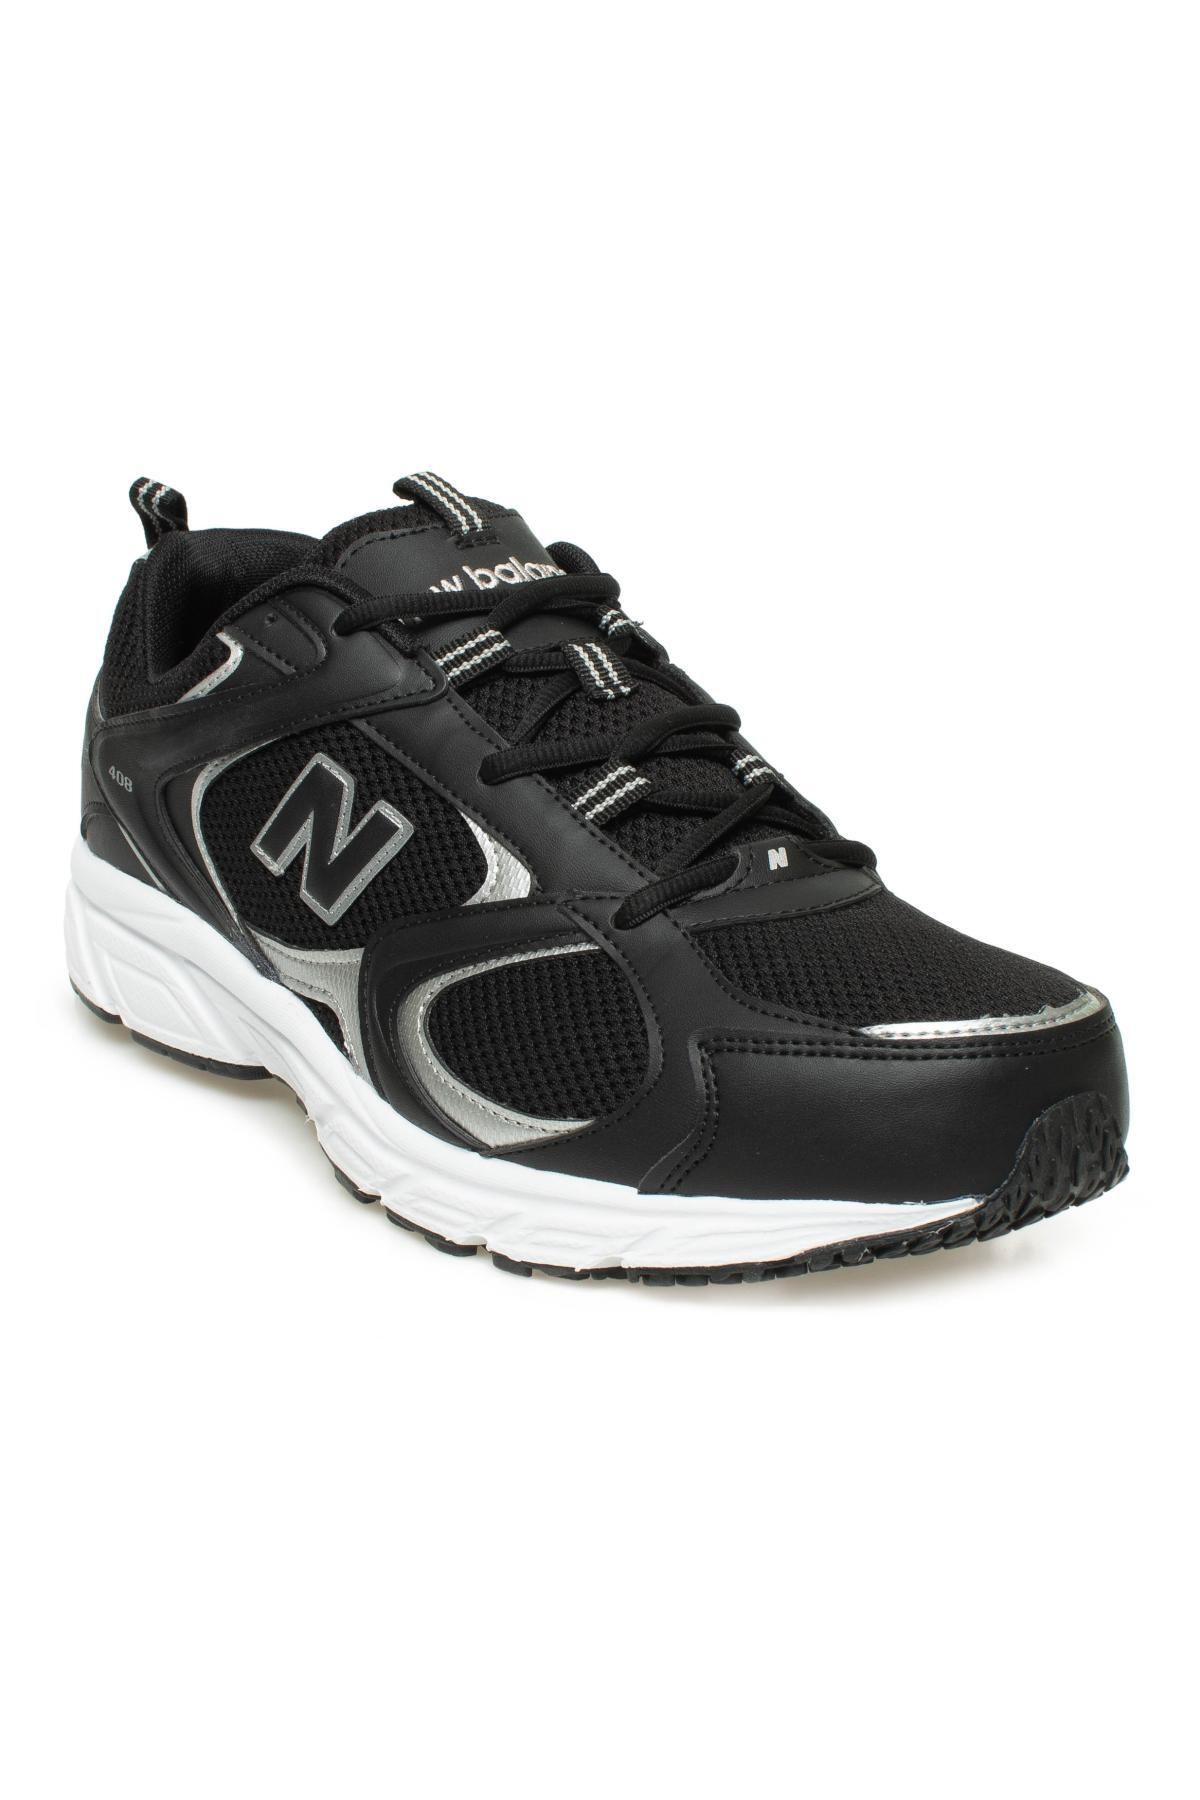 New Balance Ml408 Nb Unisex Performance Shoes Siyah Unisex Spor Ayakkabı